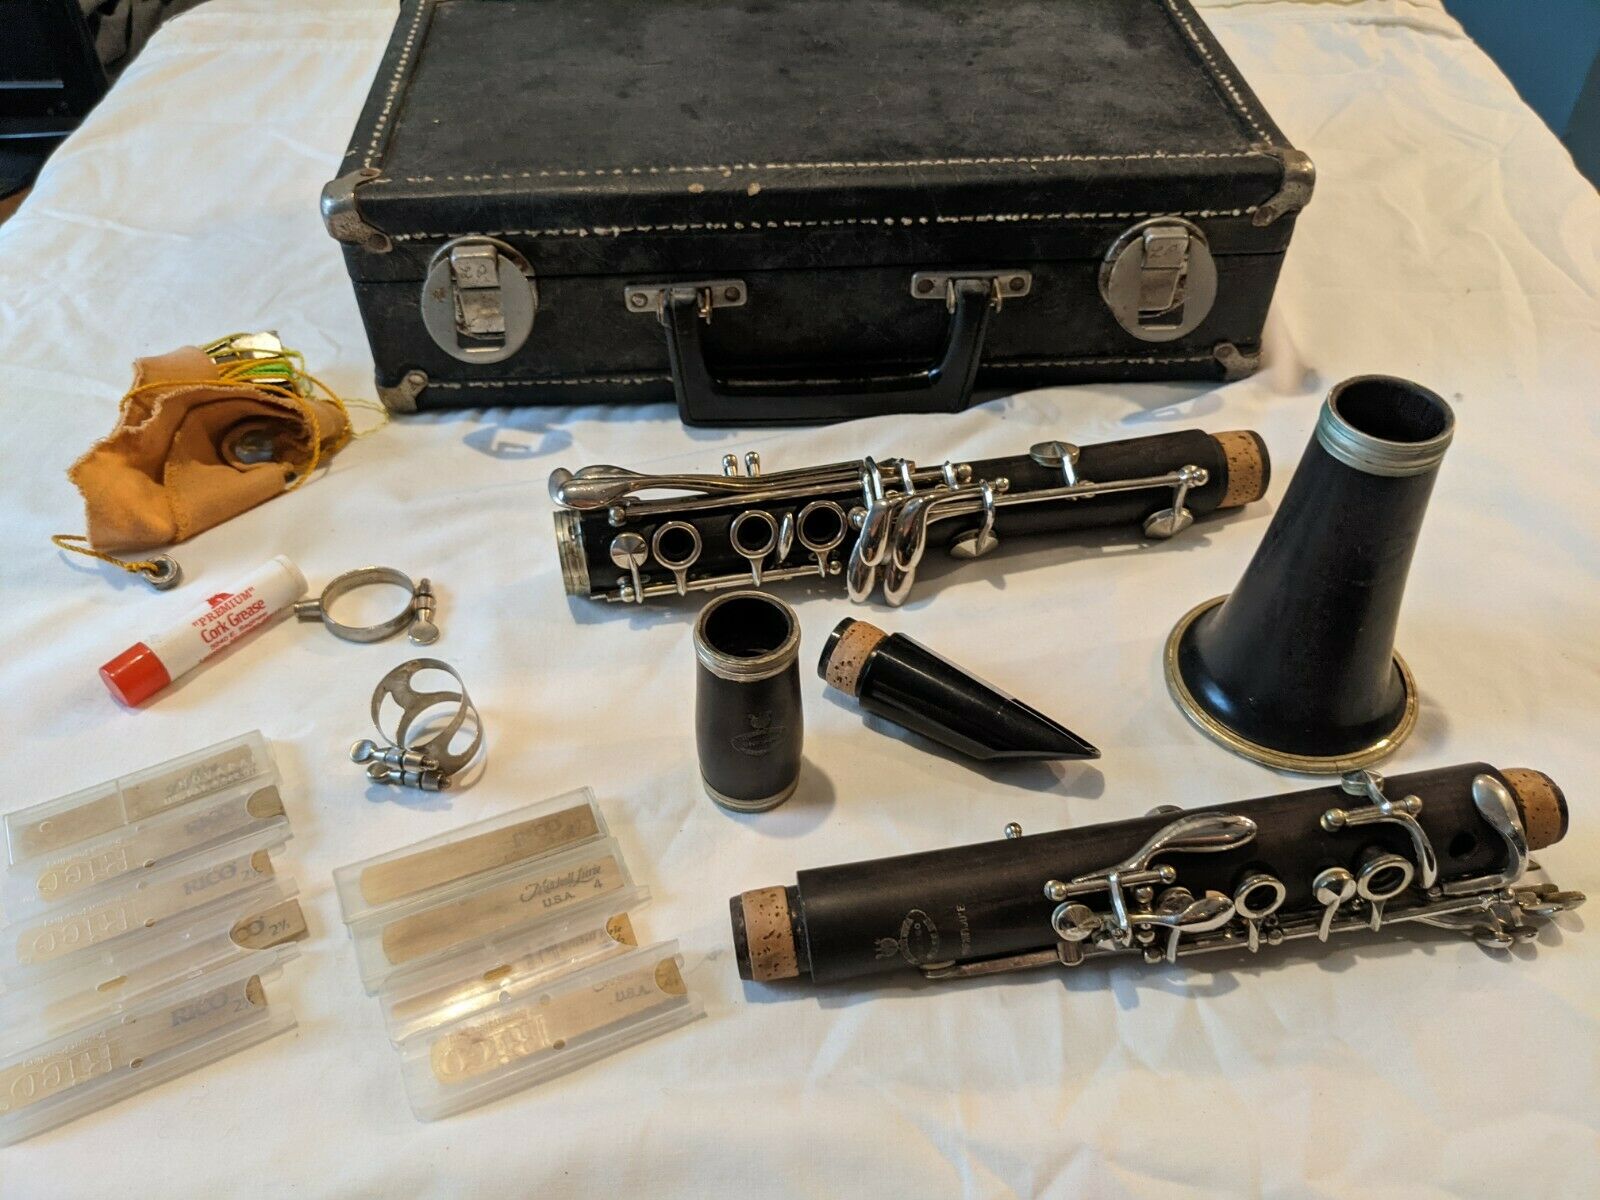 Chicago Instruments Magnifiu'e (magnifique) Wooden Clarinet